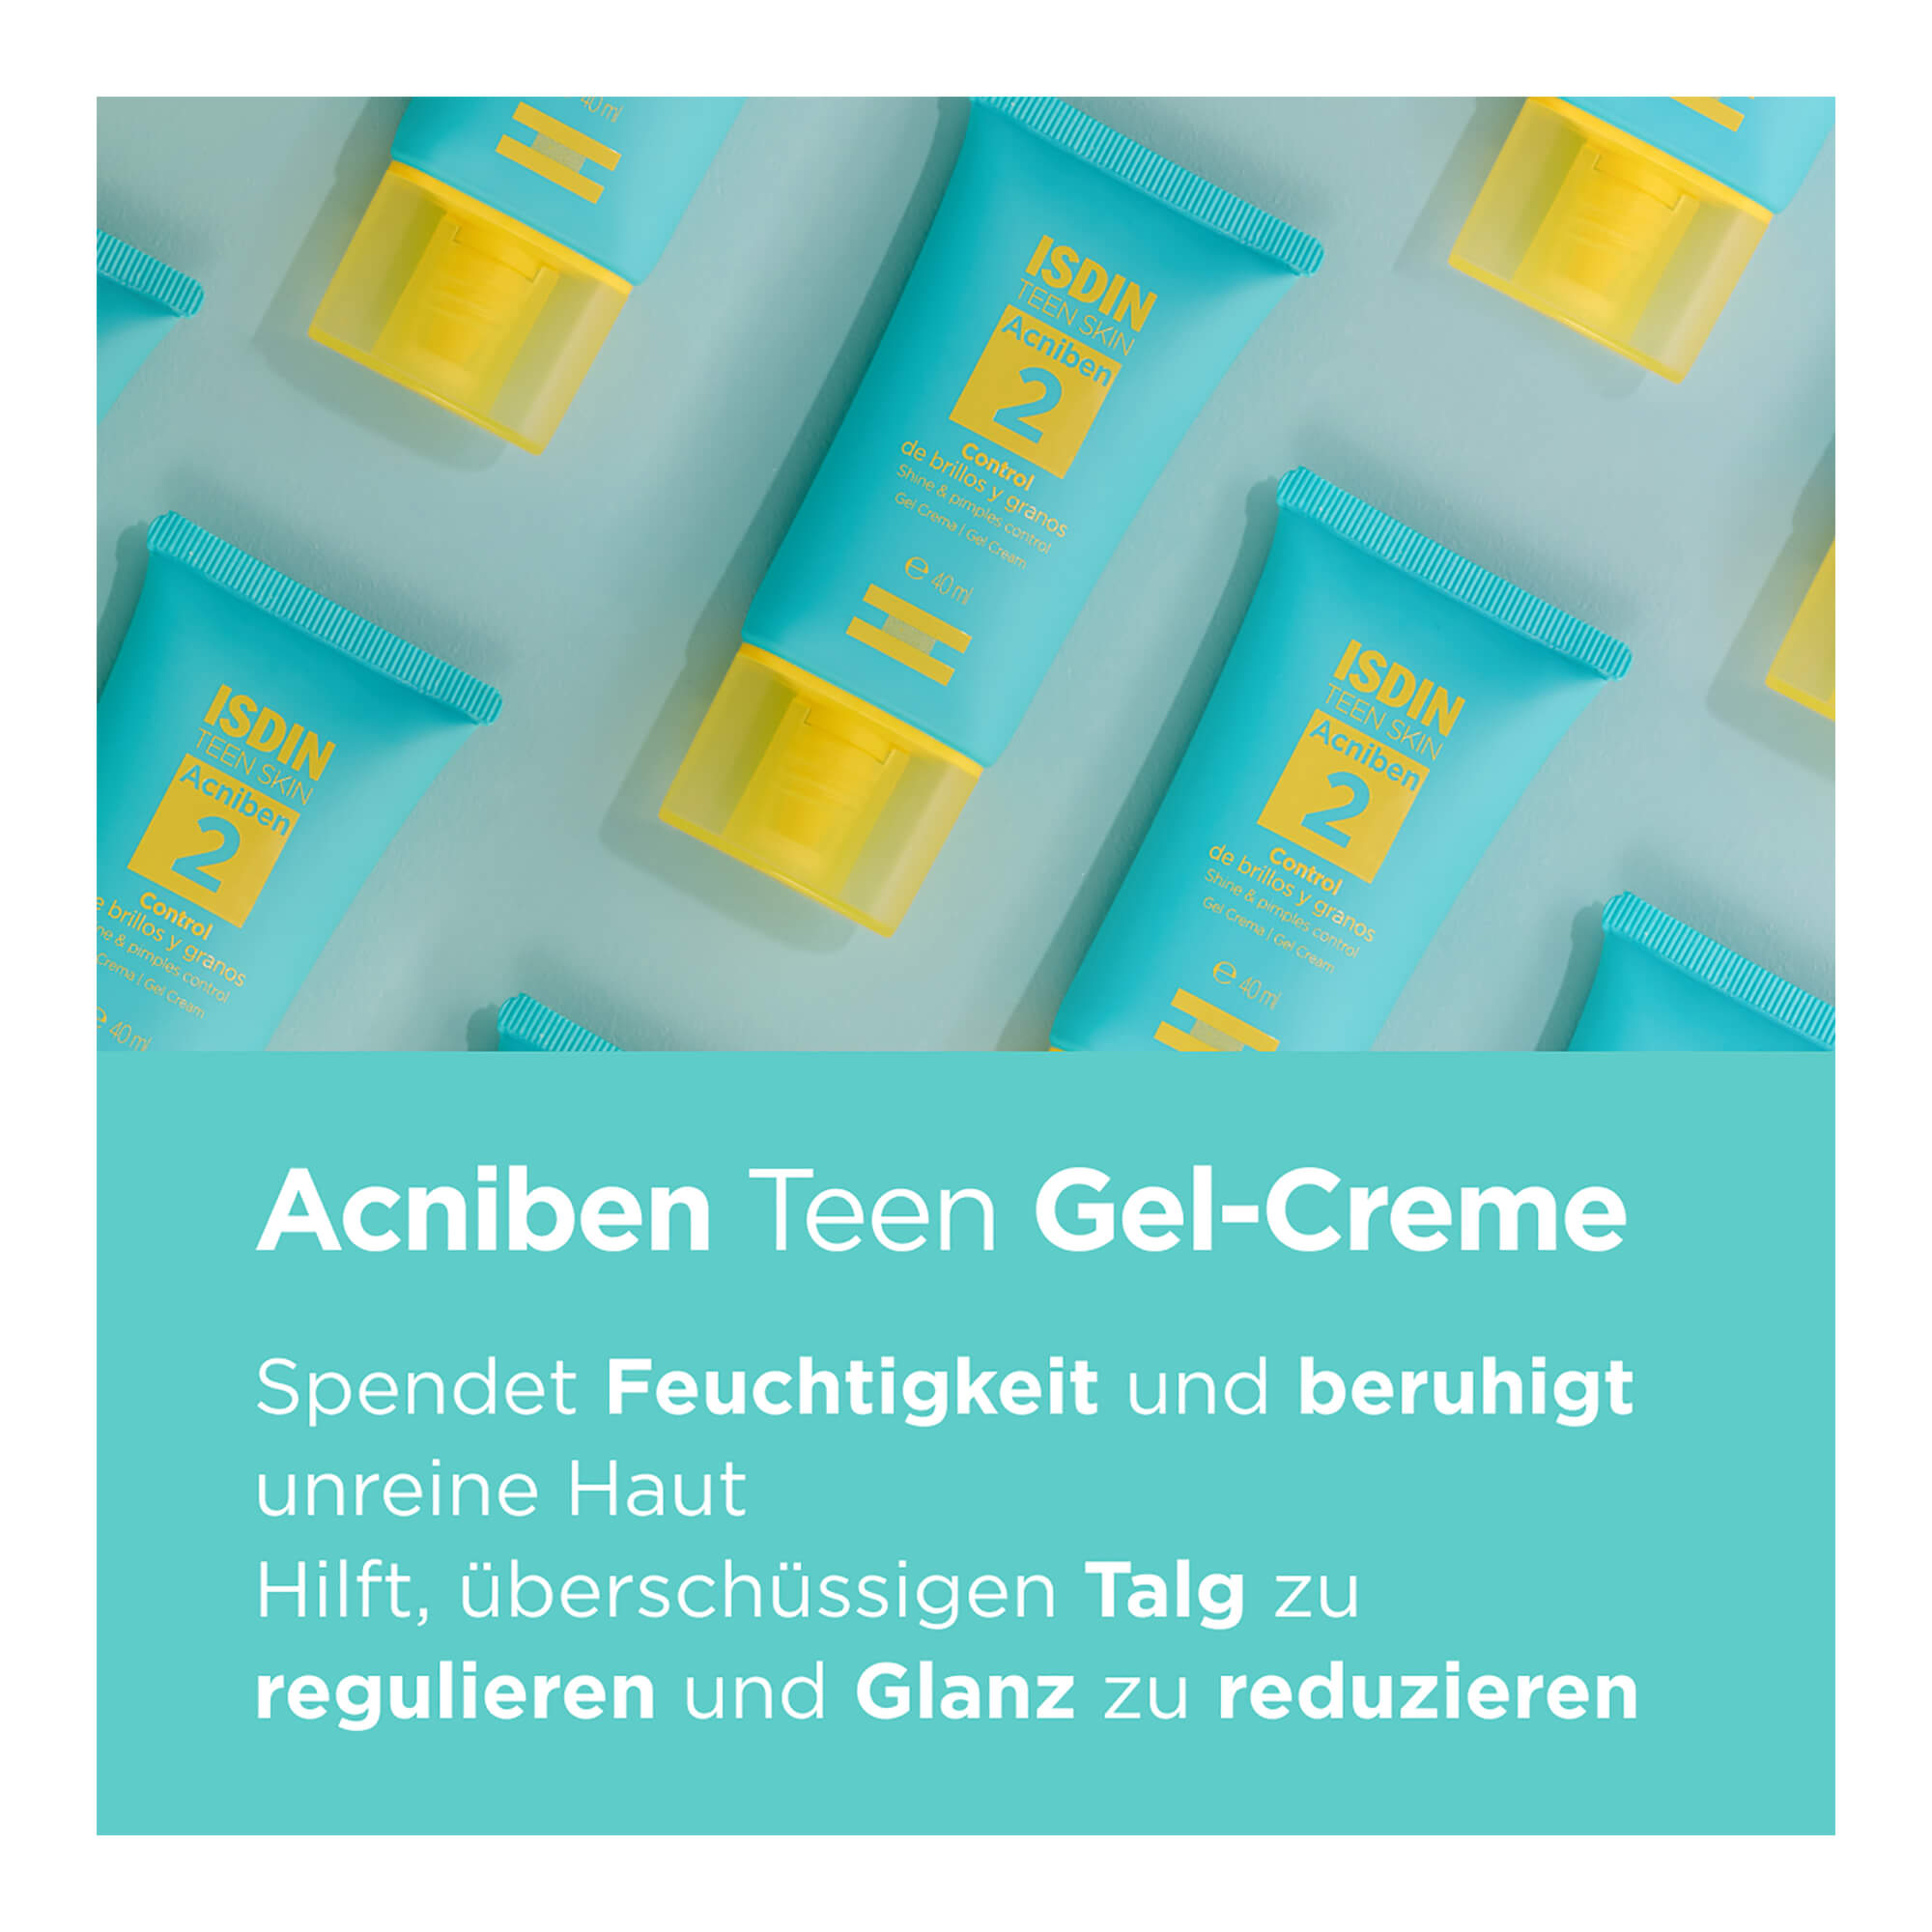 Acniben Teen Gel-Creme